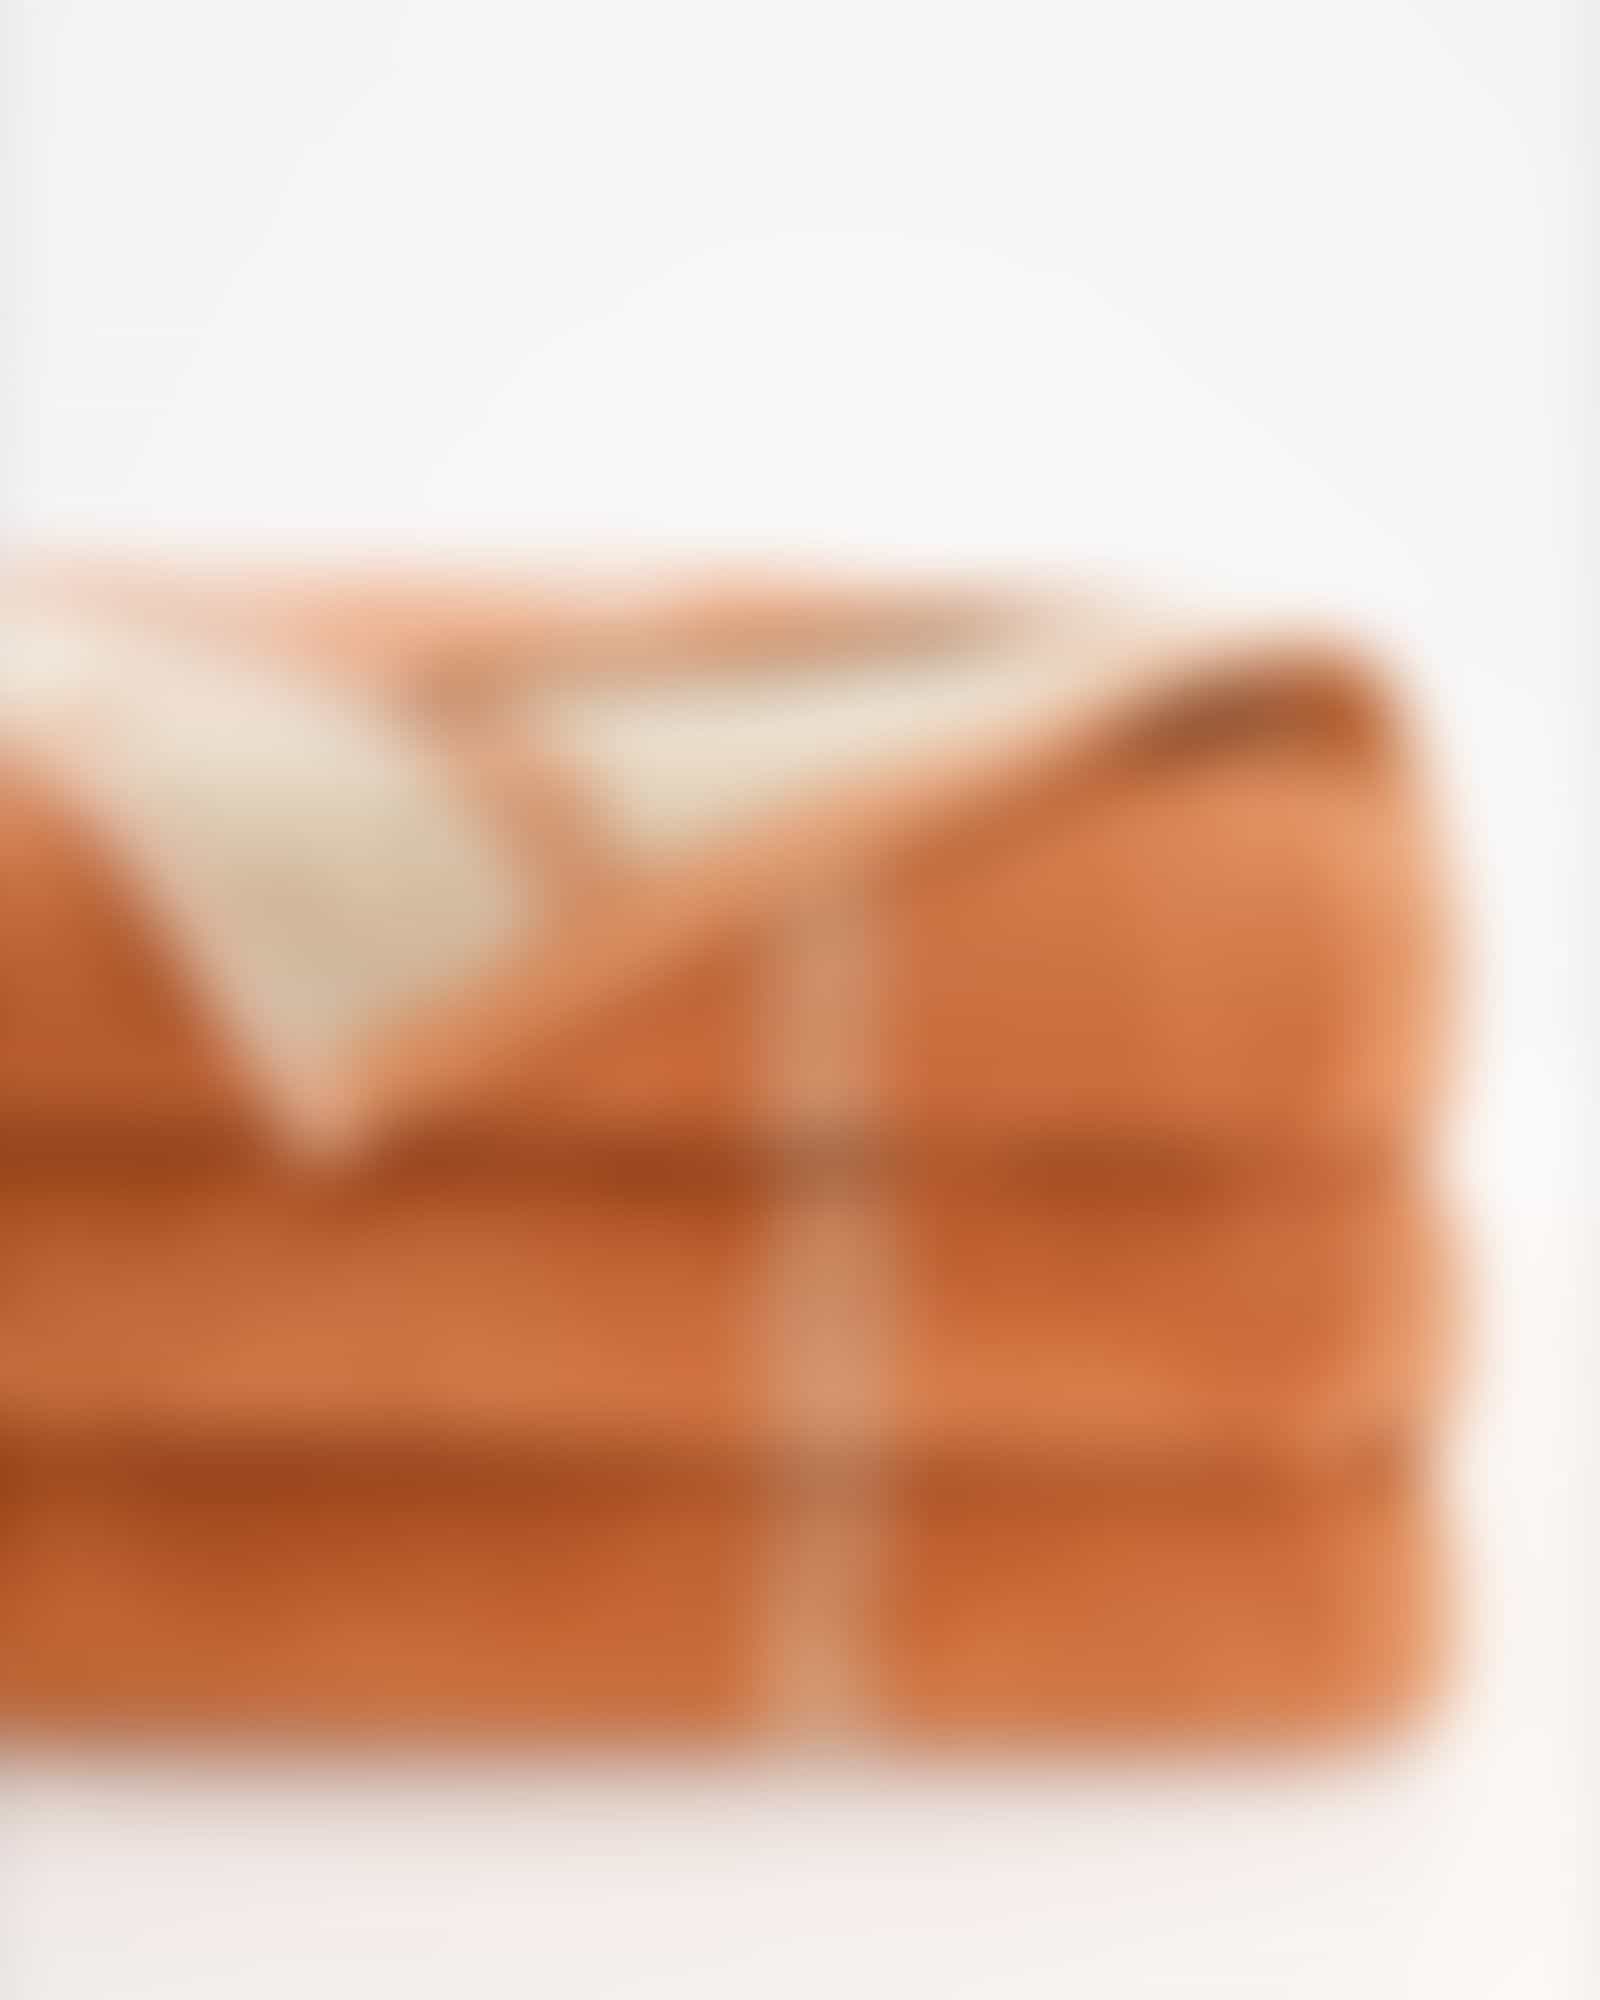 Cawö Handtücher Luxury Home Two-Tone Grafik 604 - Farbe: kupfer - 32 - Duschtuch 80x150 cm